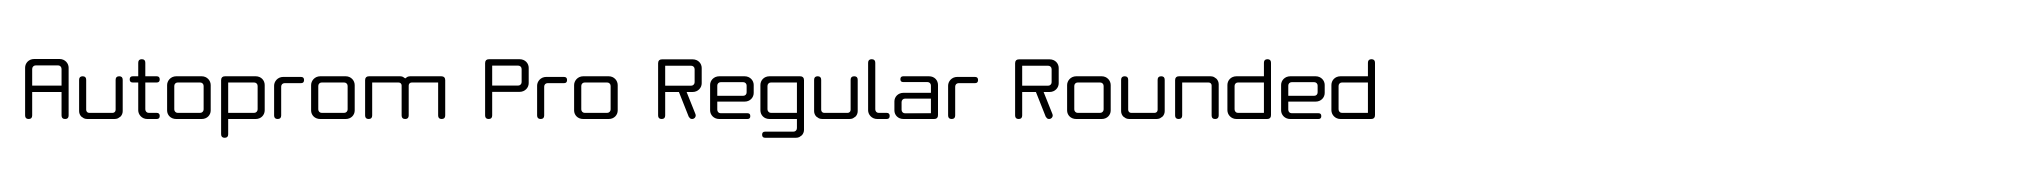 Autoprom Pro Regular Rounded image